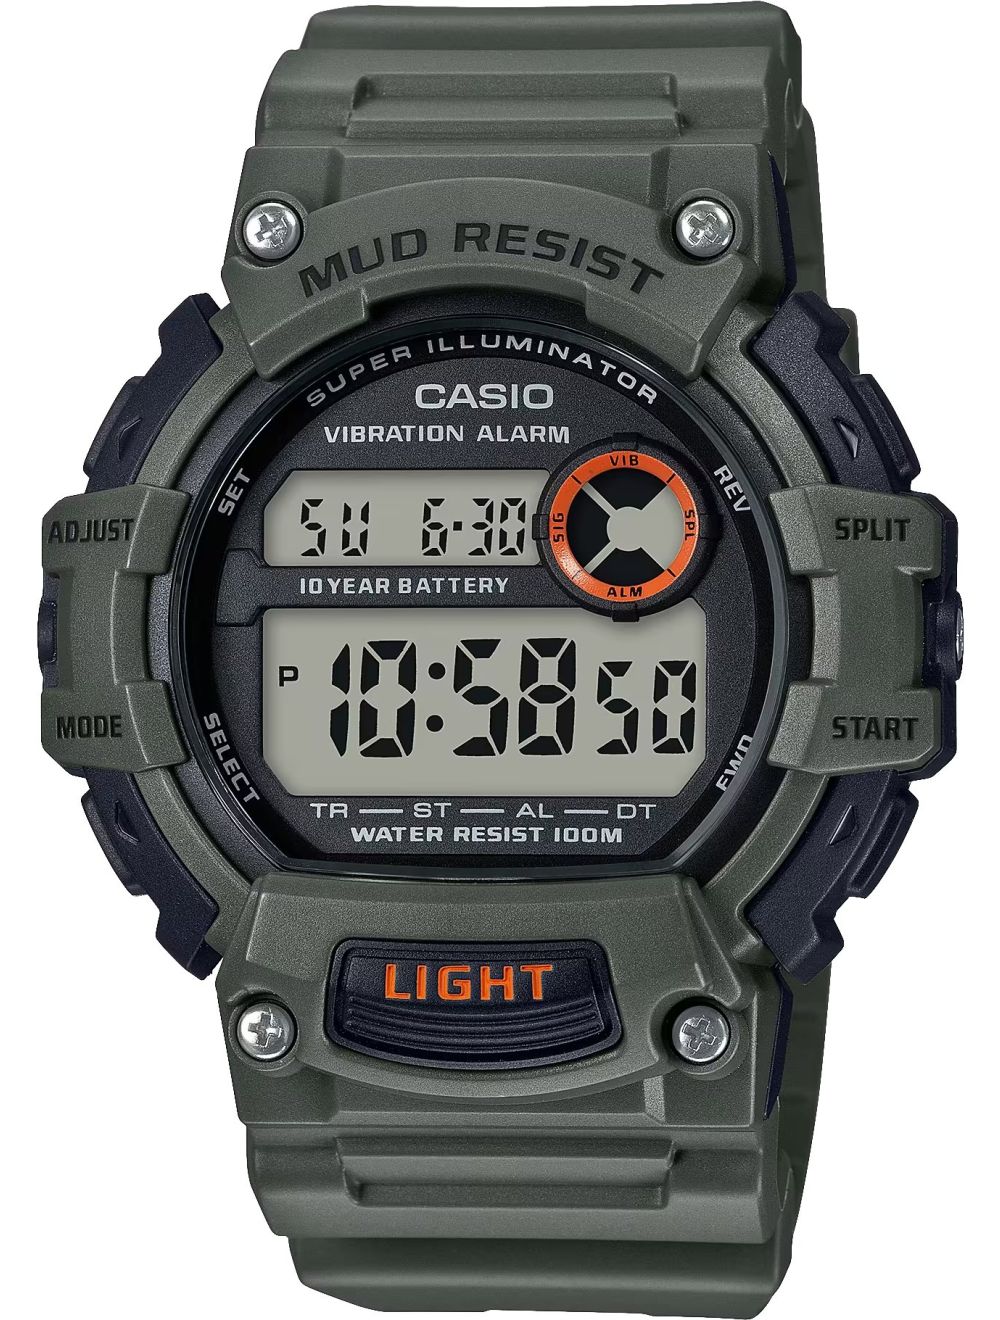 Mud-Resistant Digital Watch w/ Vibration Alarm